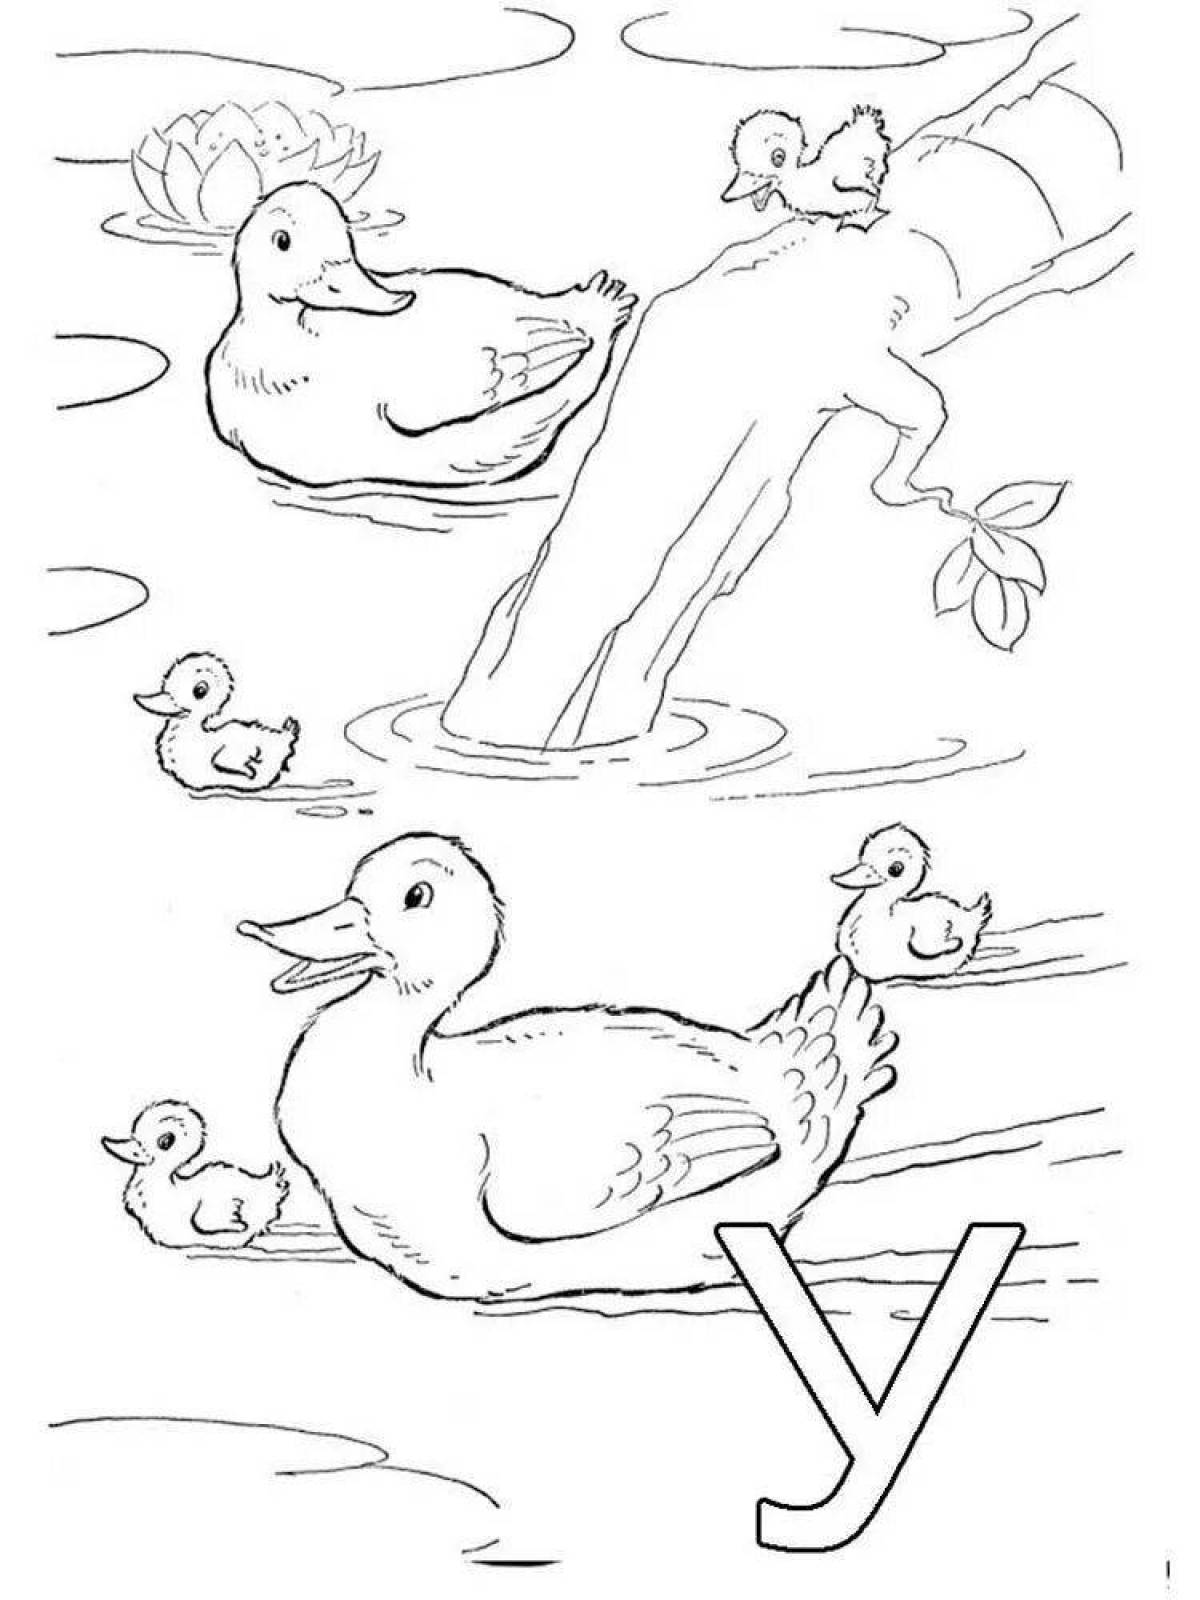 Snuggly duck с утятами